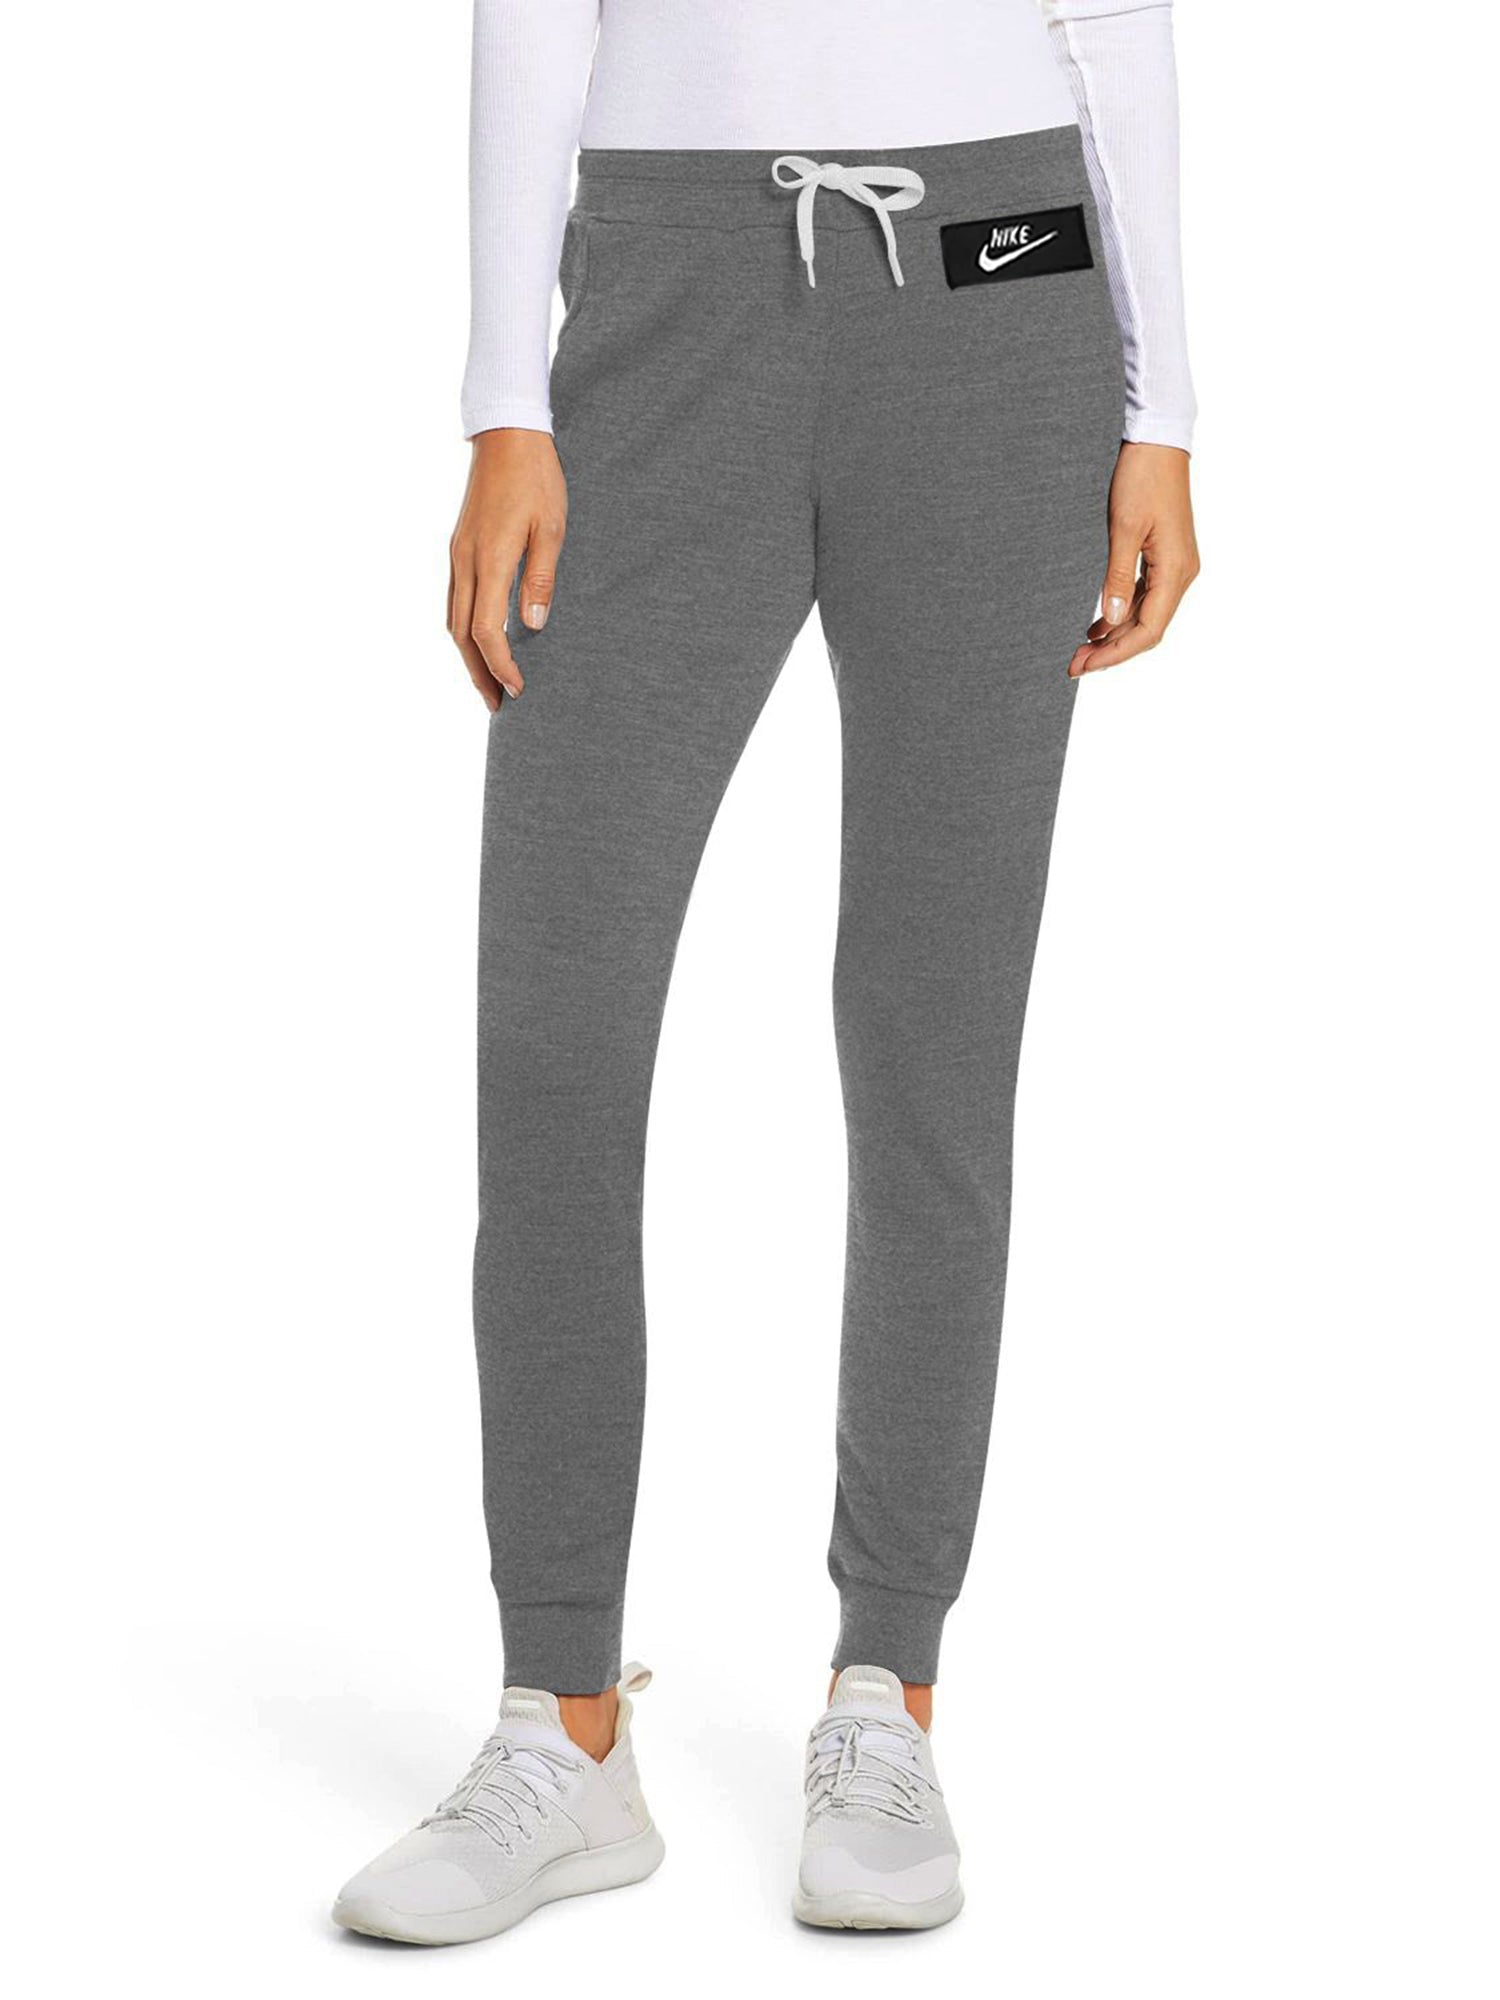 NK Fleece Slim Fit Trouser For Ladies-Charcoal Melange-SP570